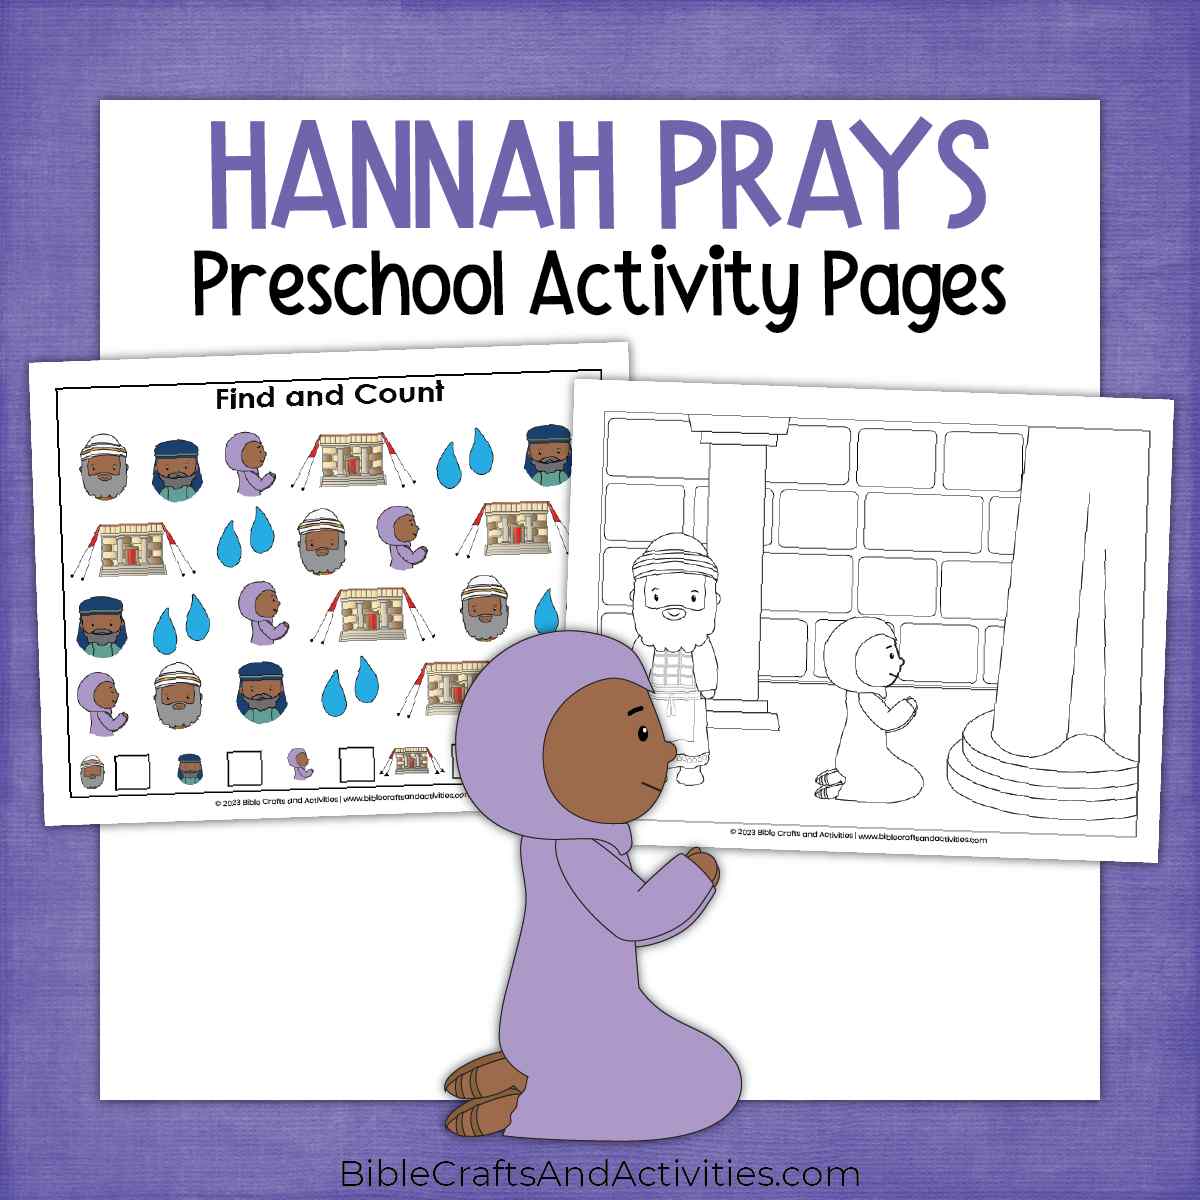 Hannah prays for samuel preschool activity pages